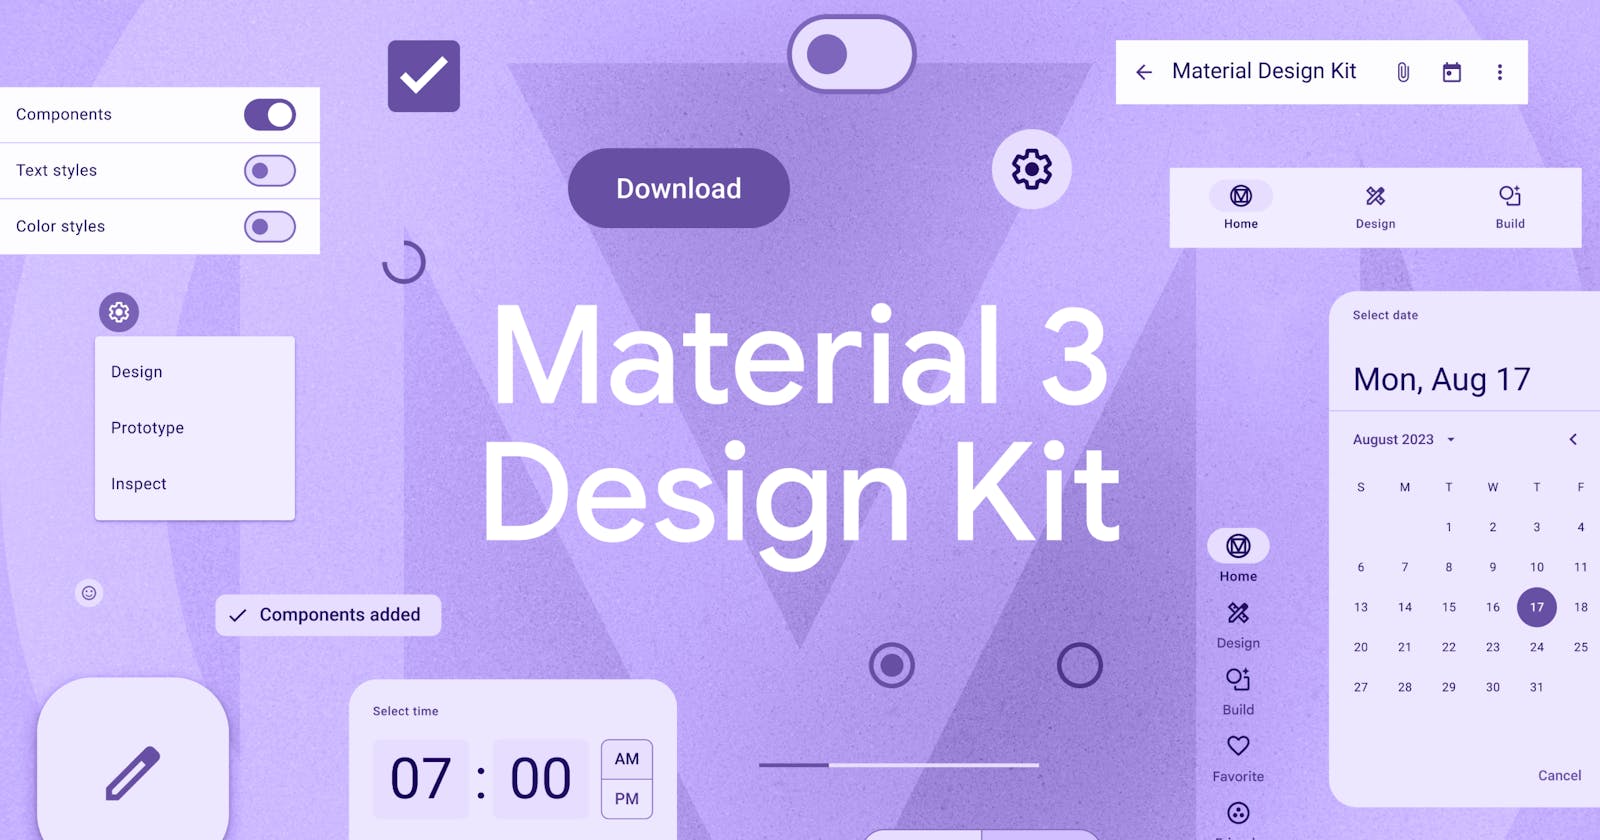 Material Design 3 for Mobile Application Development